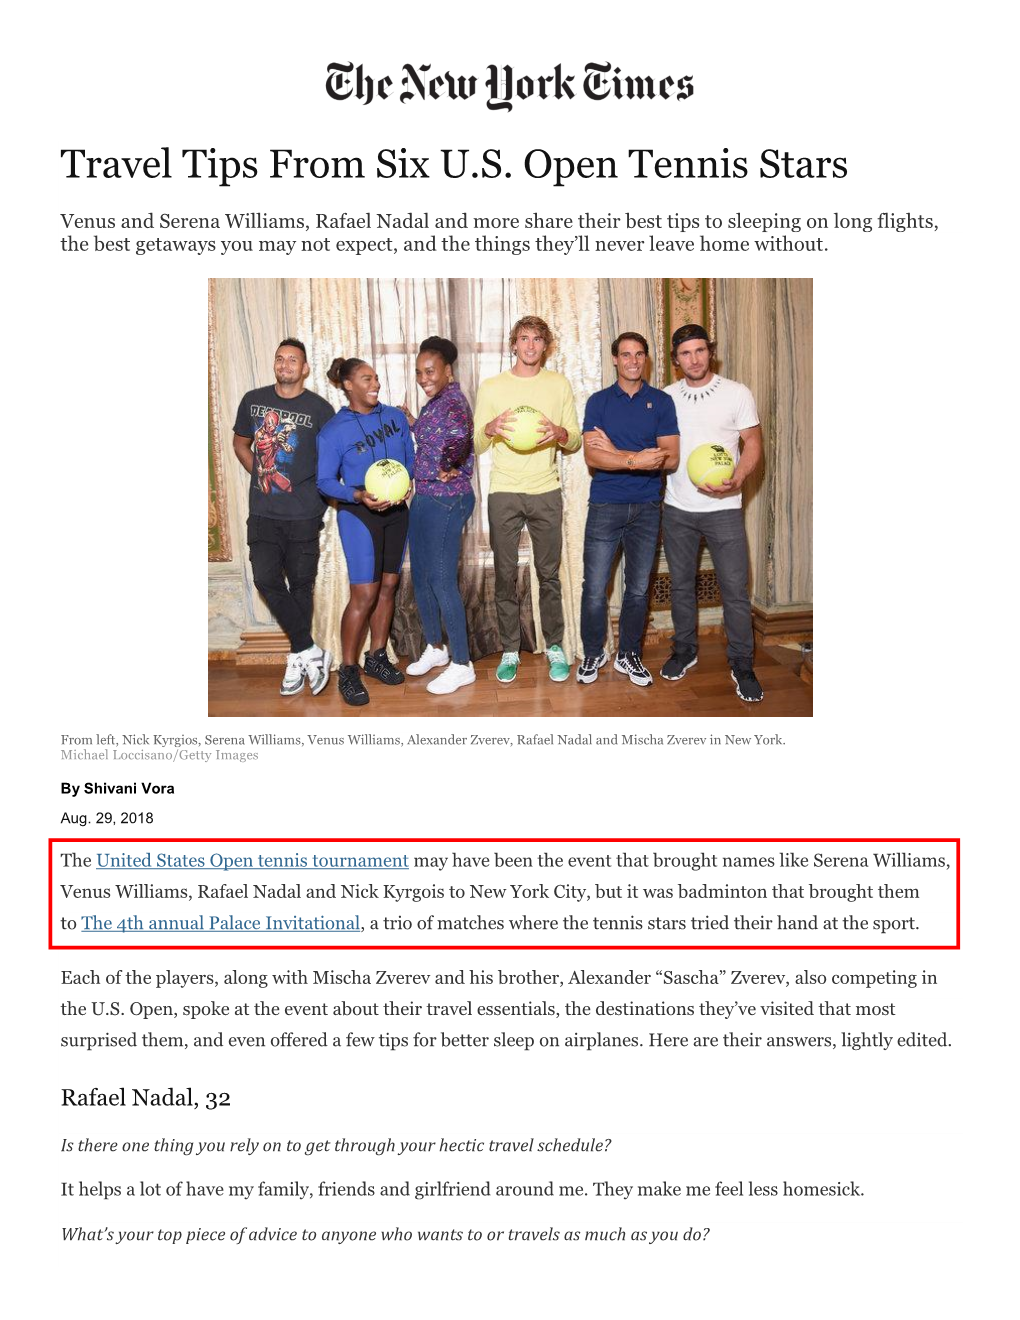 Travel Tips from Six U.S. Open Tennis Stars